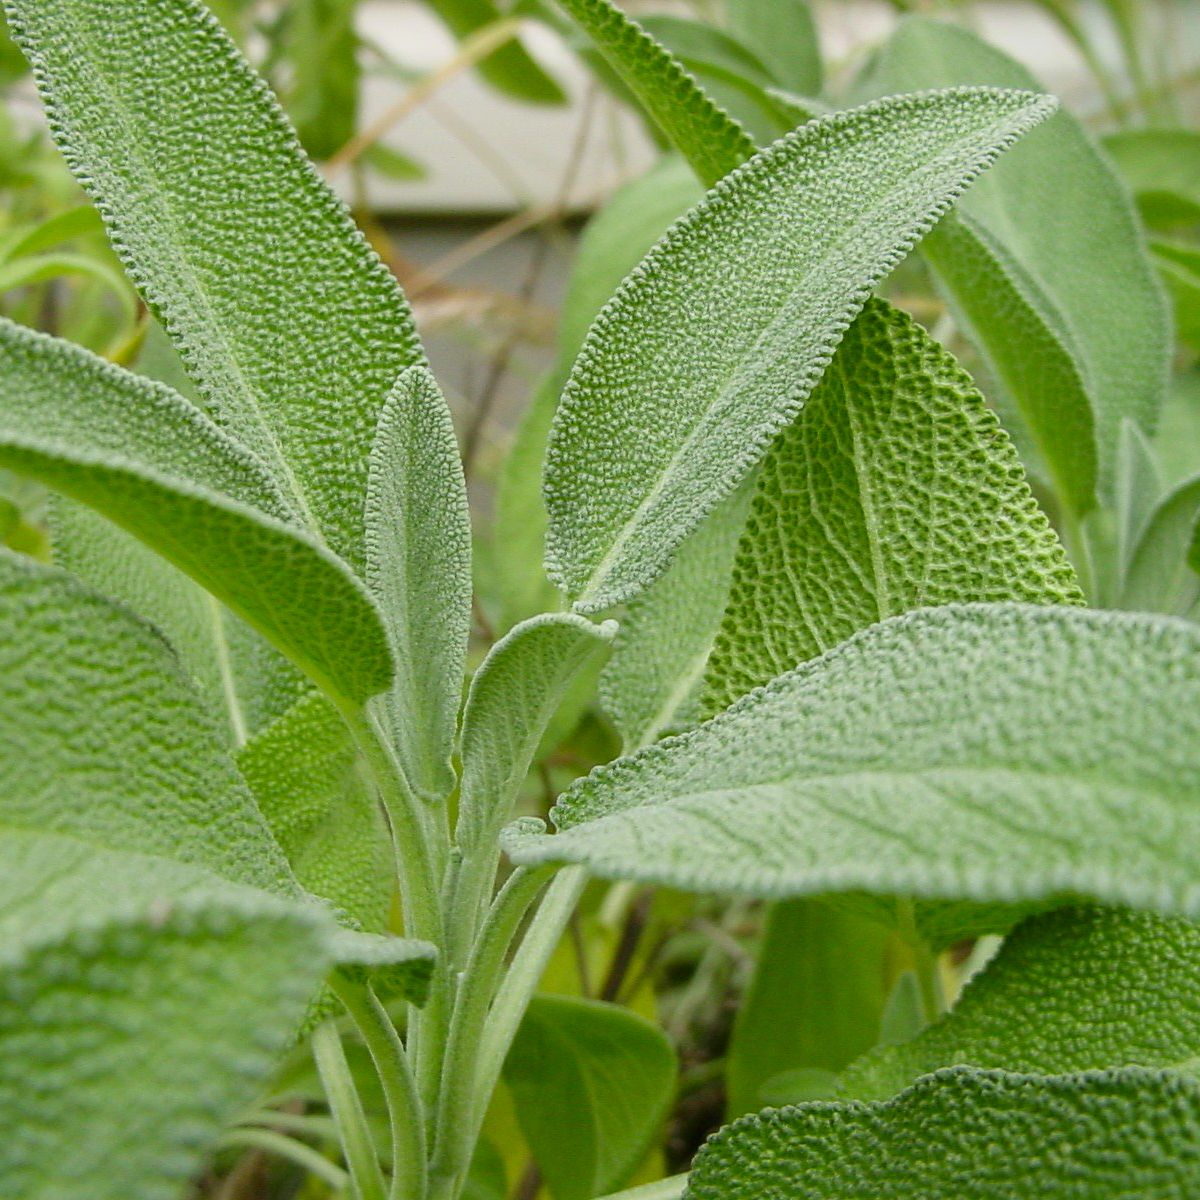 Salbei (Salvia officinalis) Samen